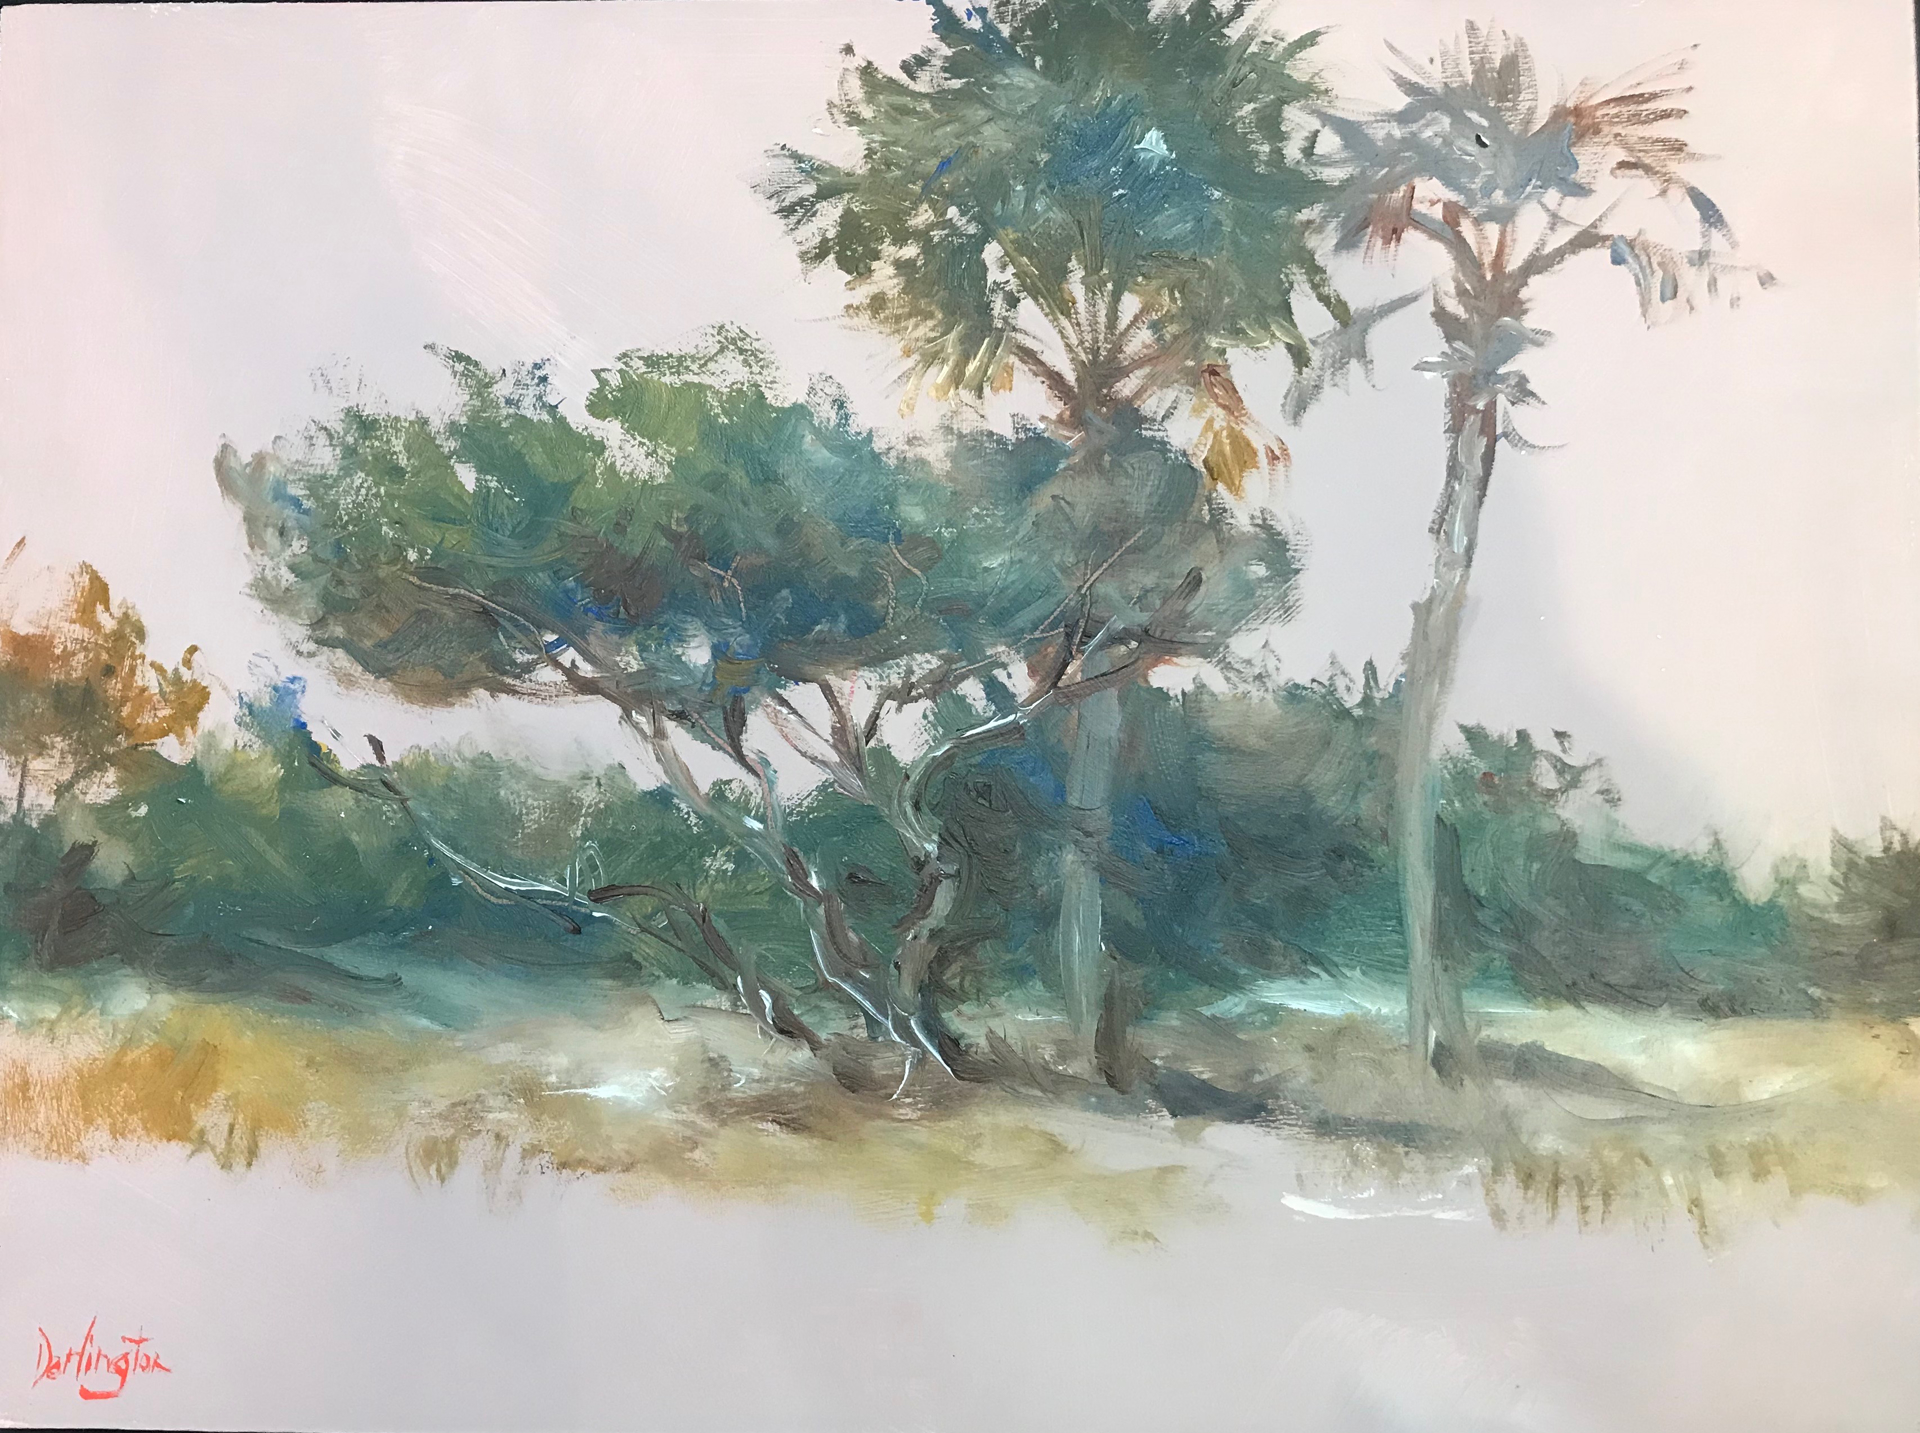 Study of the Cedar Tree and Palmettos by Jim Darlington